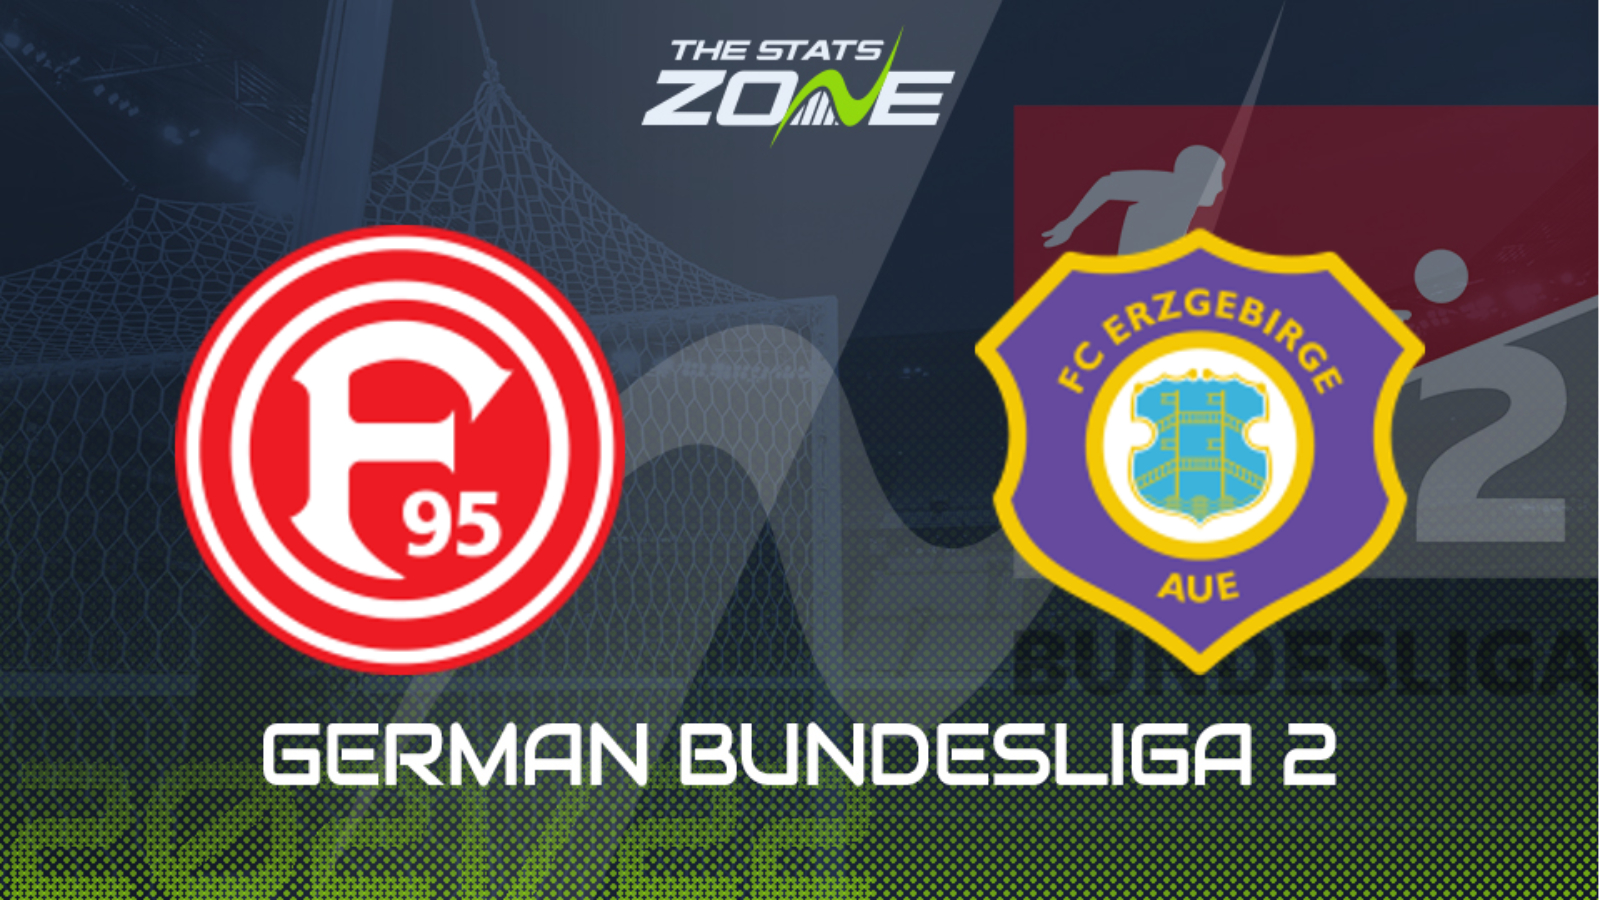 Fortuna Dusseldorf vs Erzgebirge Aue Preview and Prediction